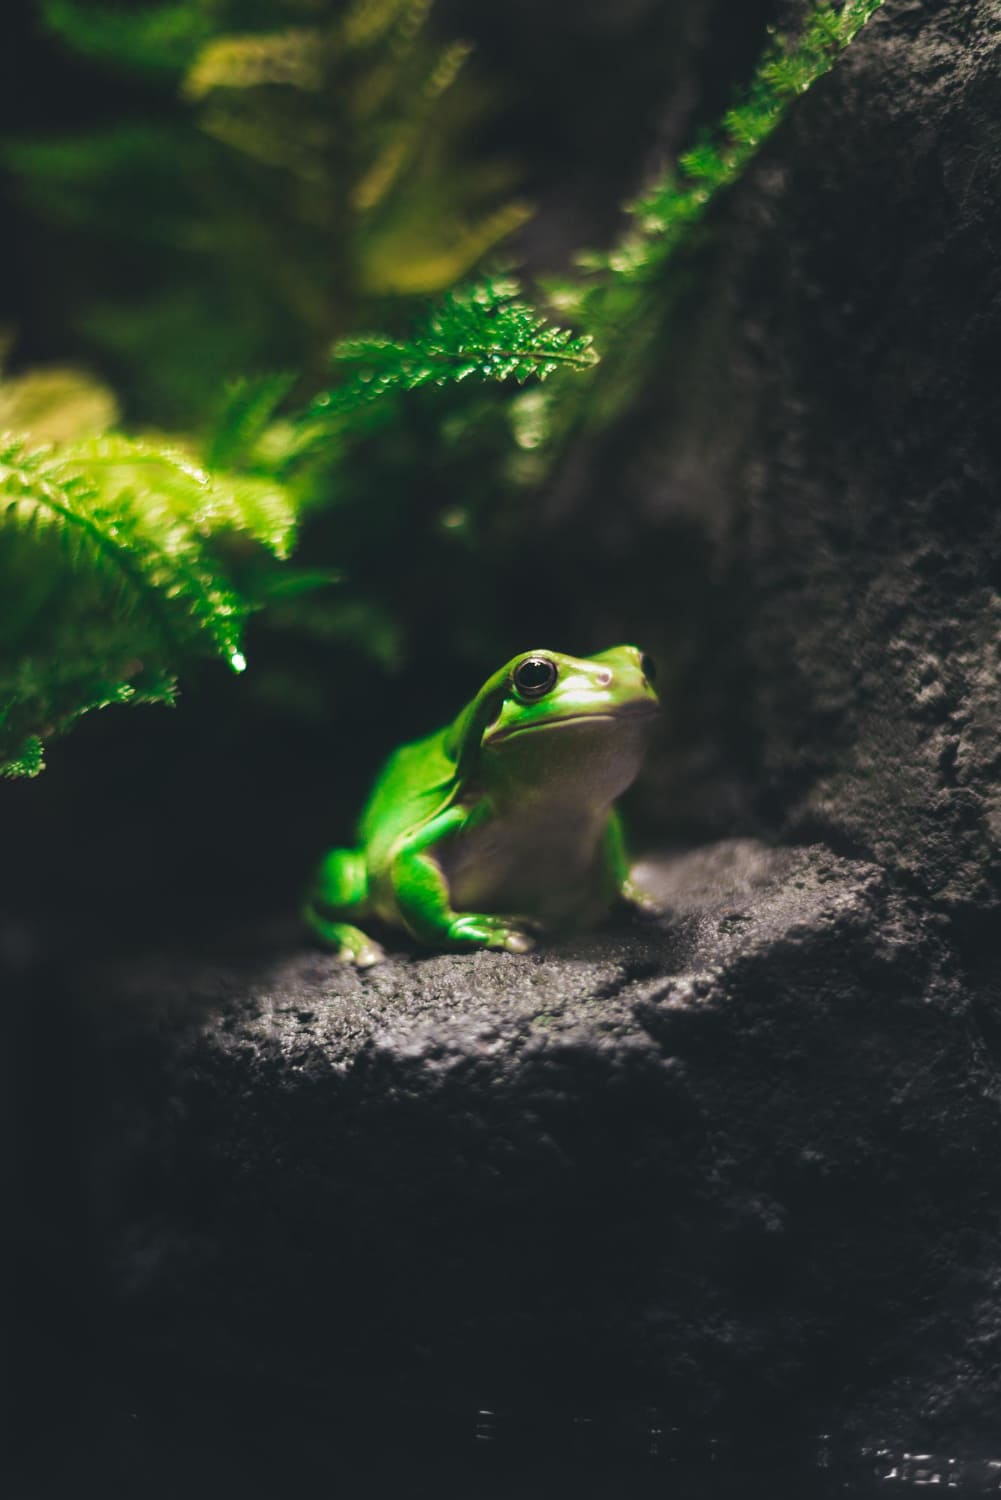 Frog staying the dark